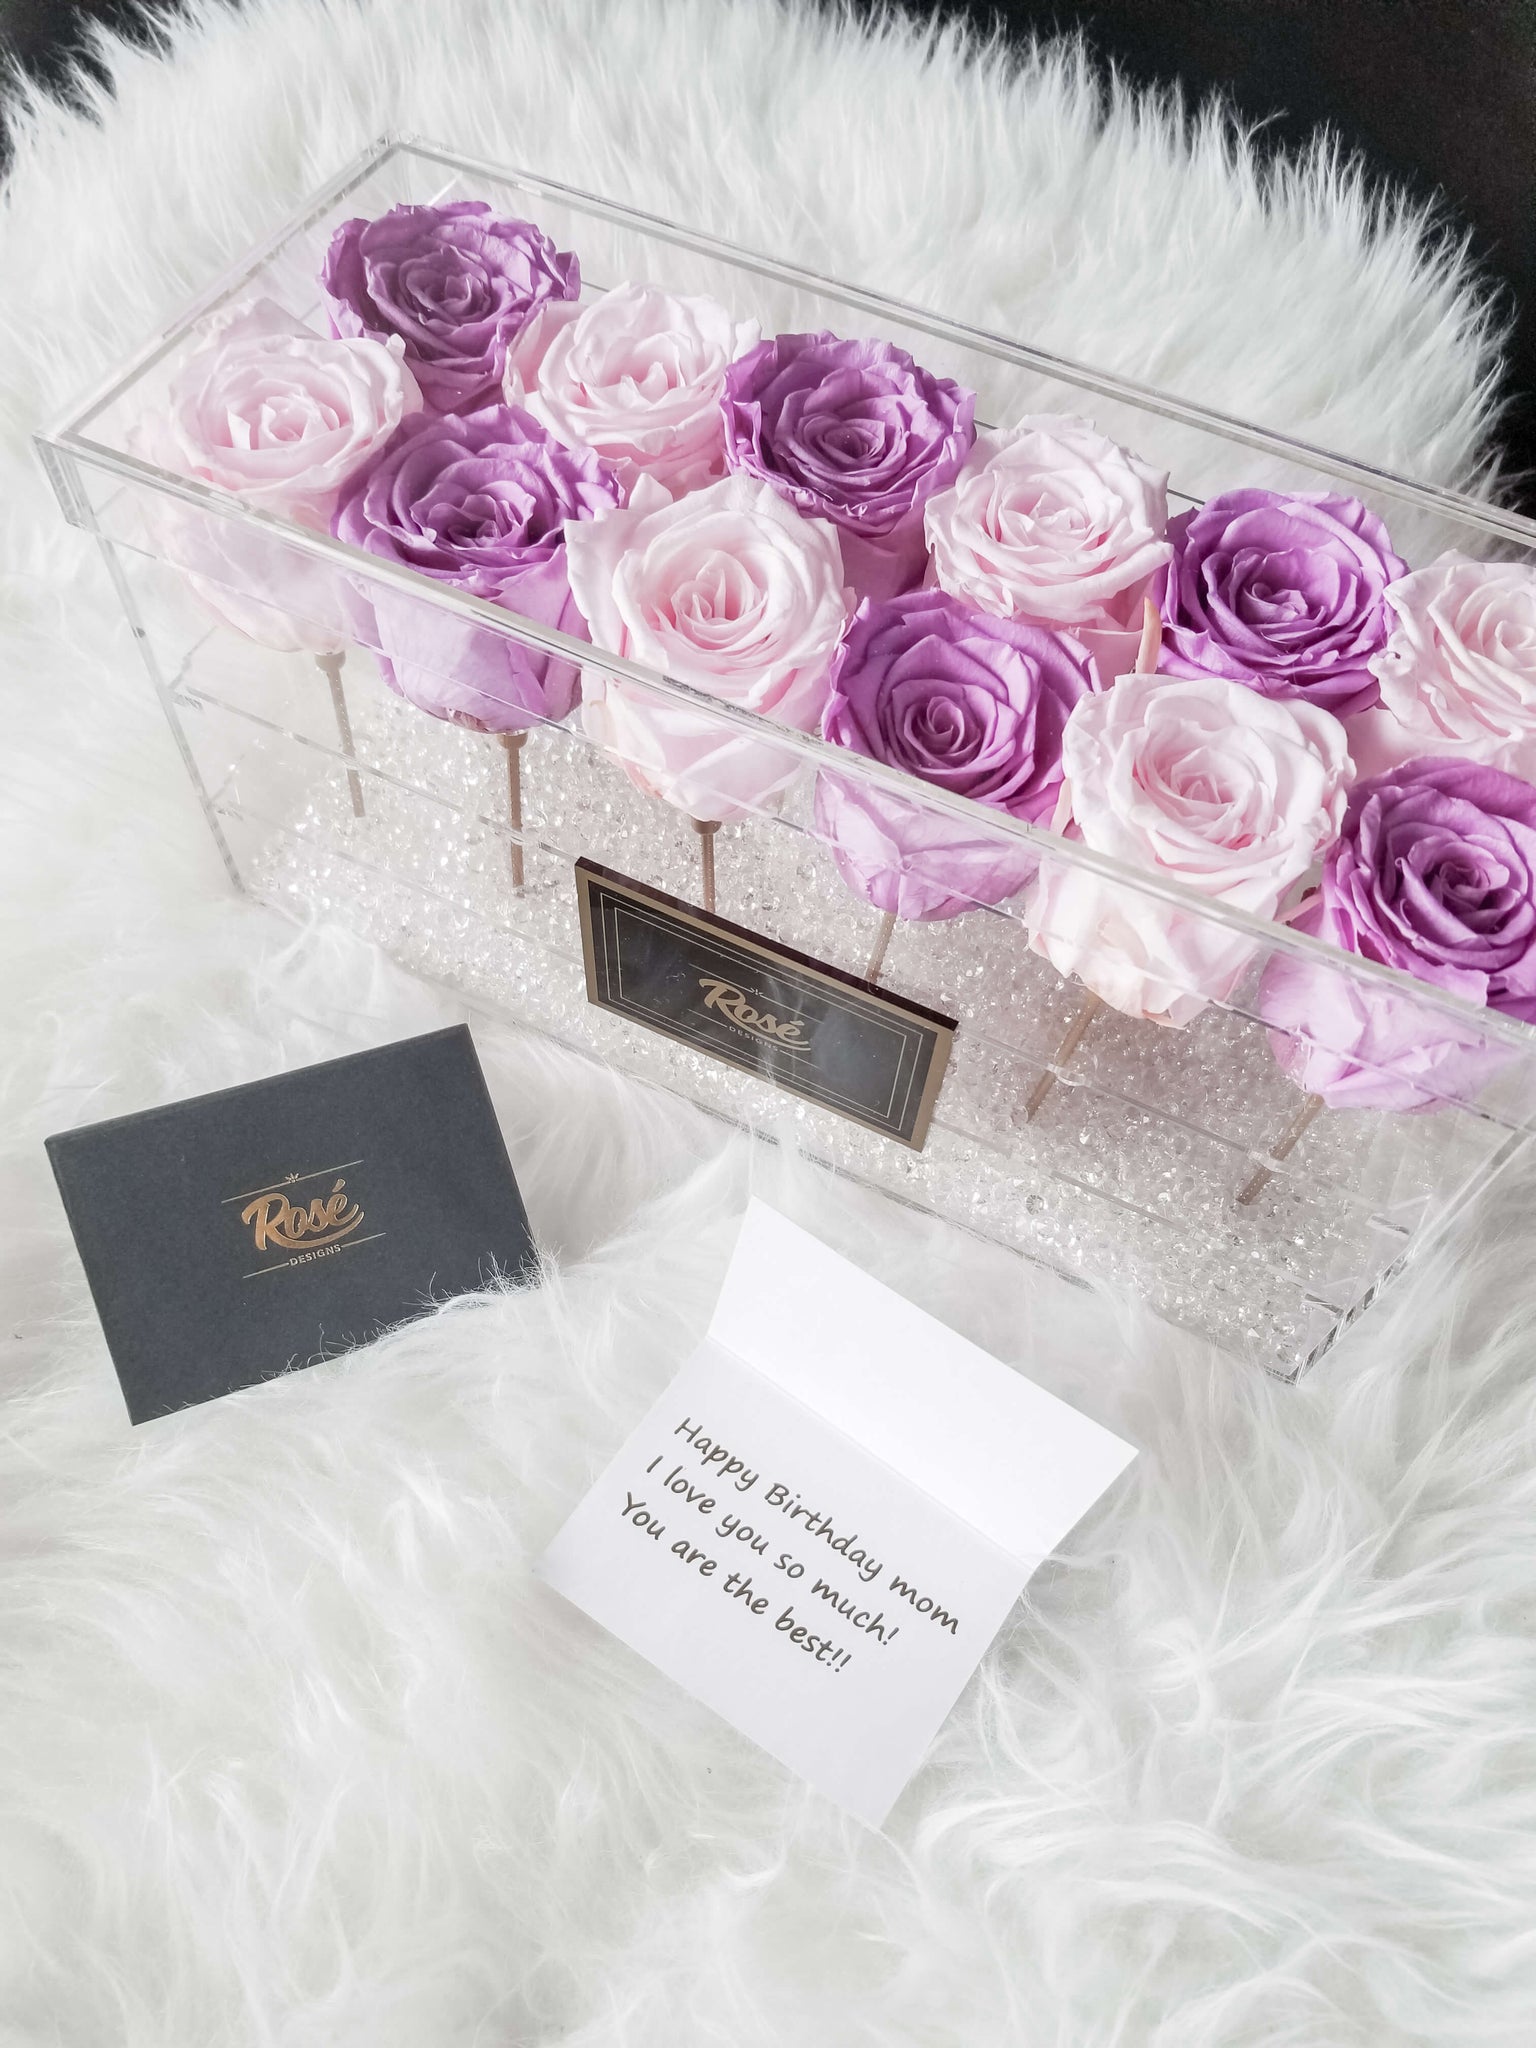 1 Dozen Rose Bouquet  Forever Rose Deluxe Gift Calgary Canada